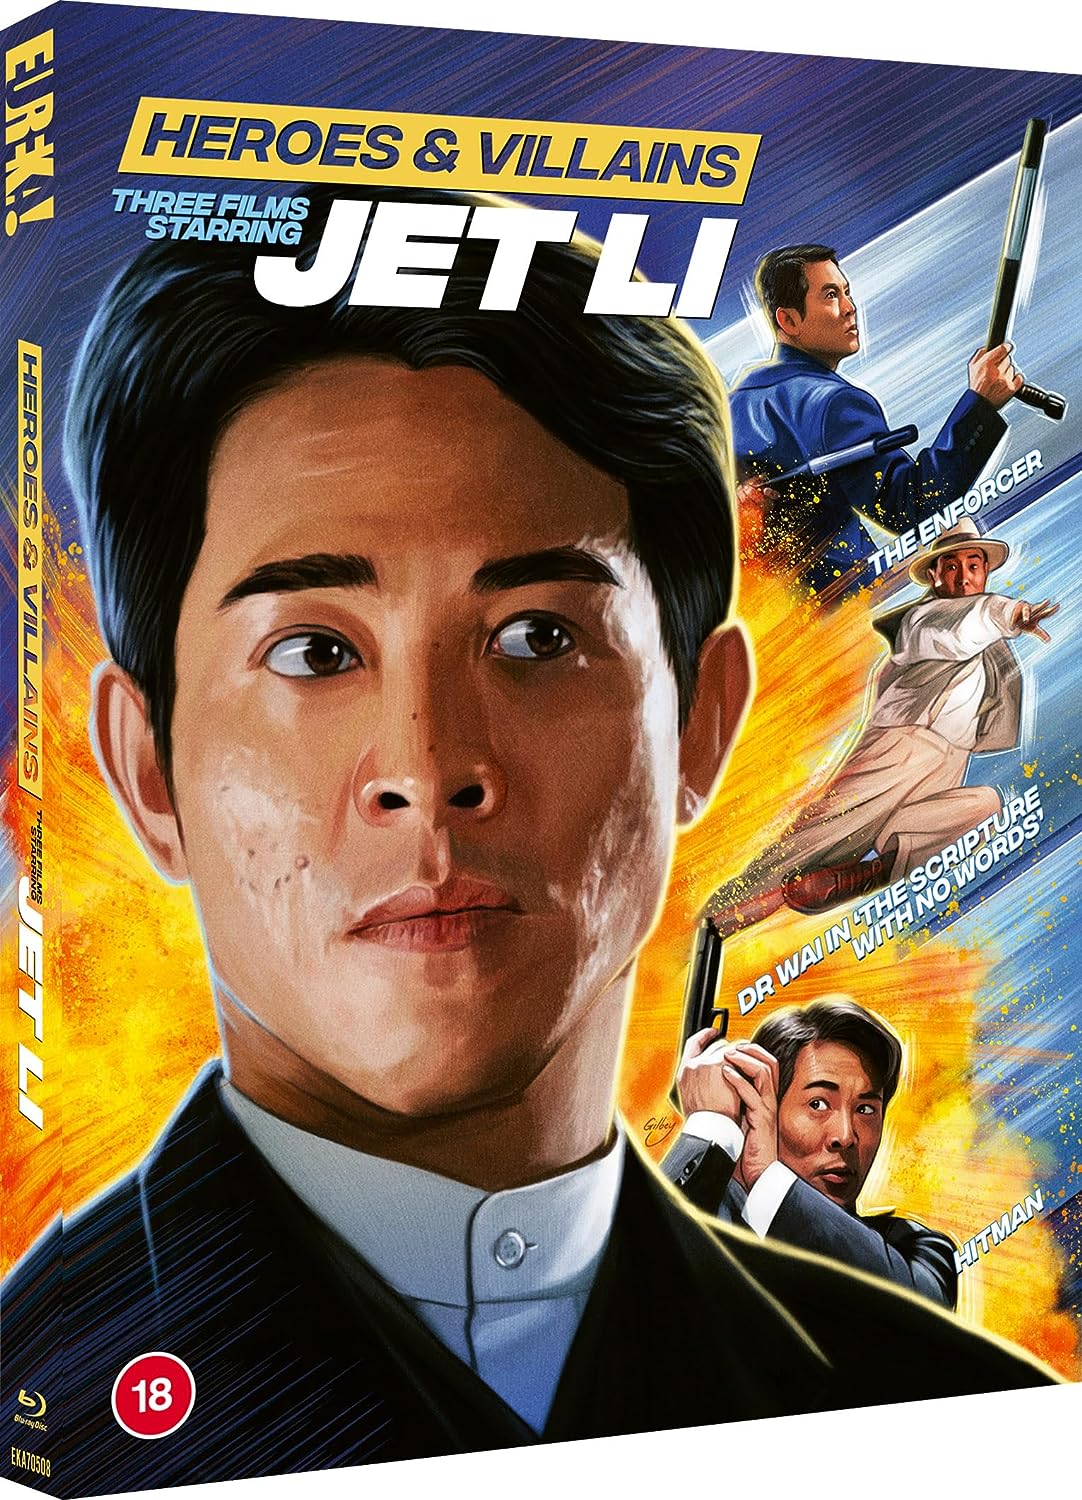 Heroes and Villains : Three Films starring Jet Li Limited Edition Eureka Video Blu-Ray [NEW] [SLIPCOVER]